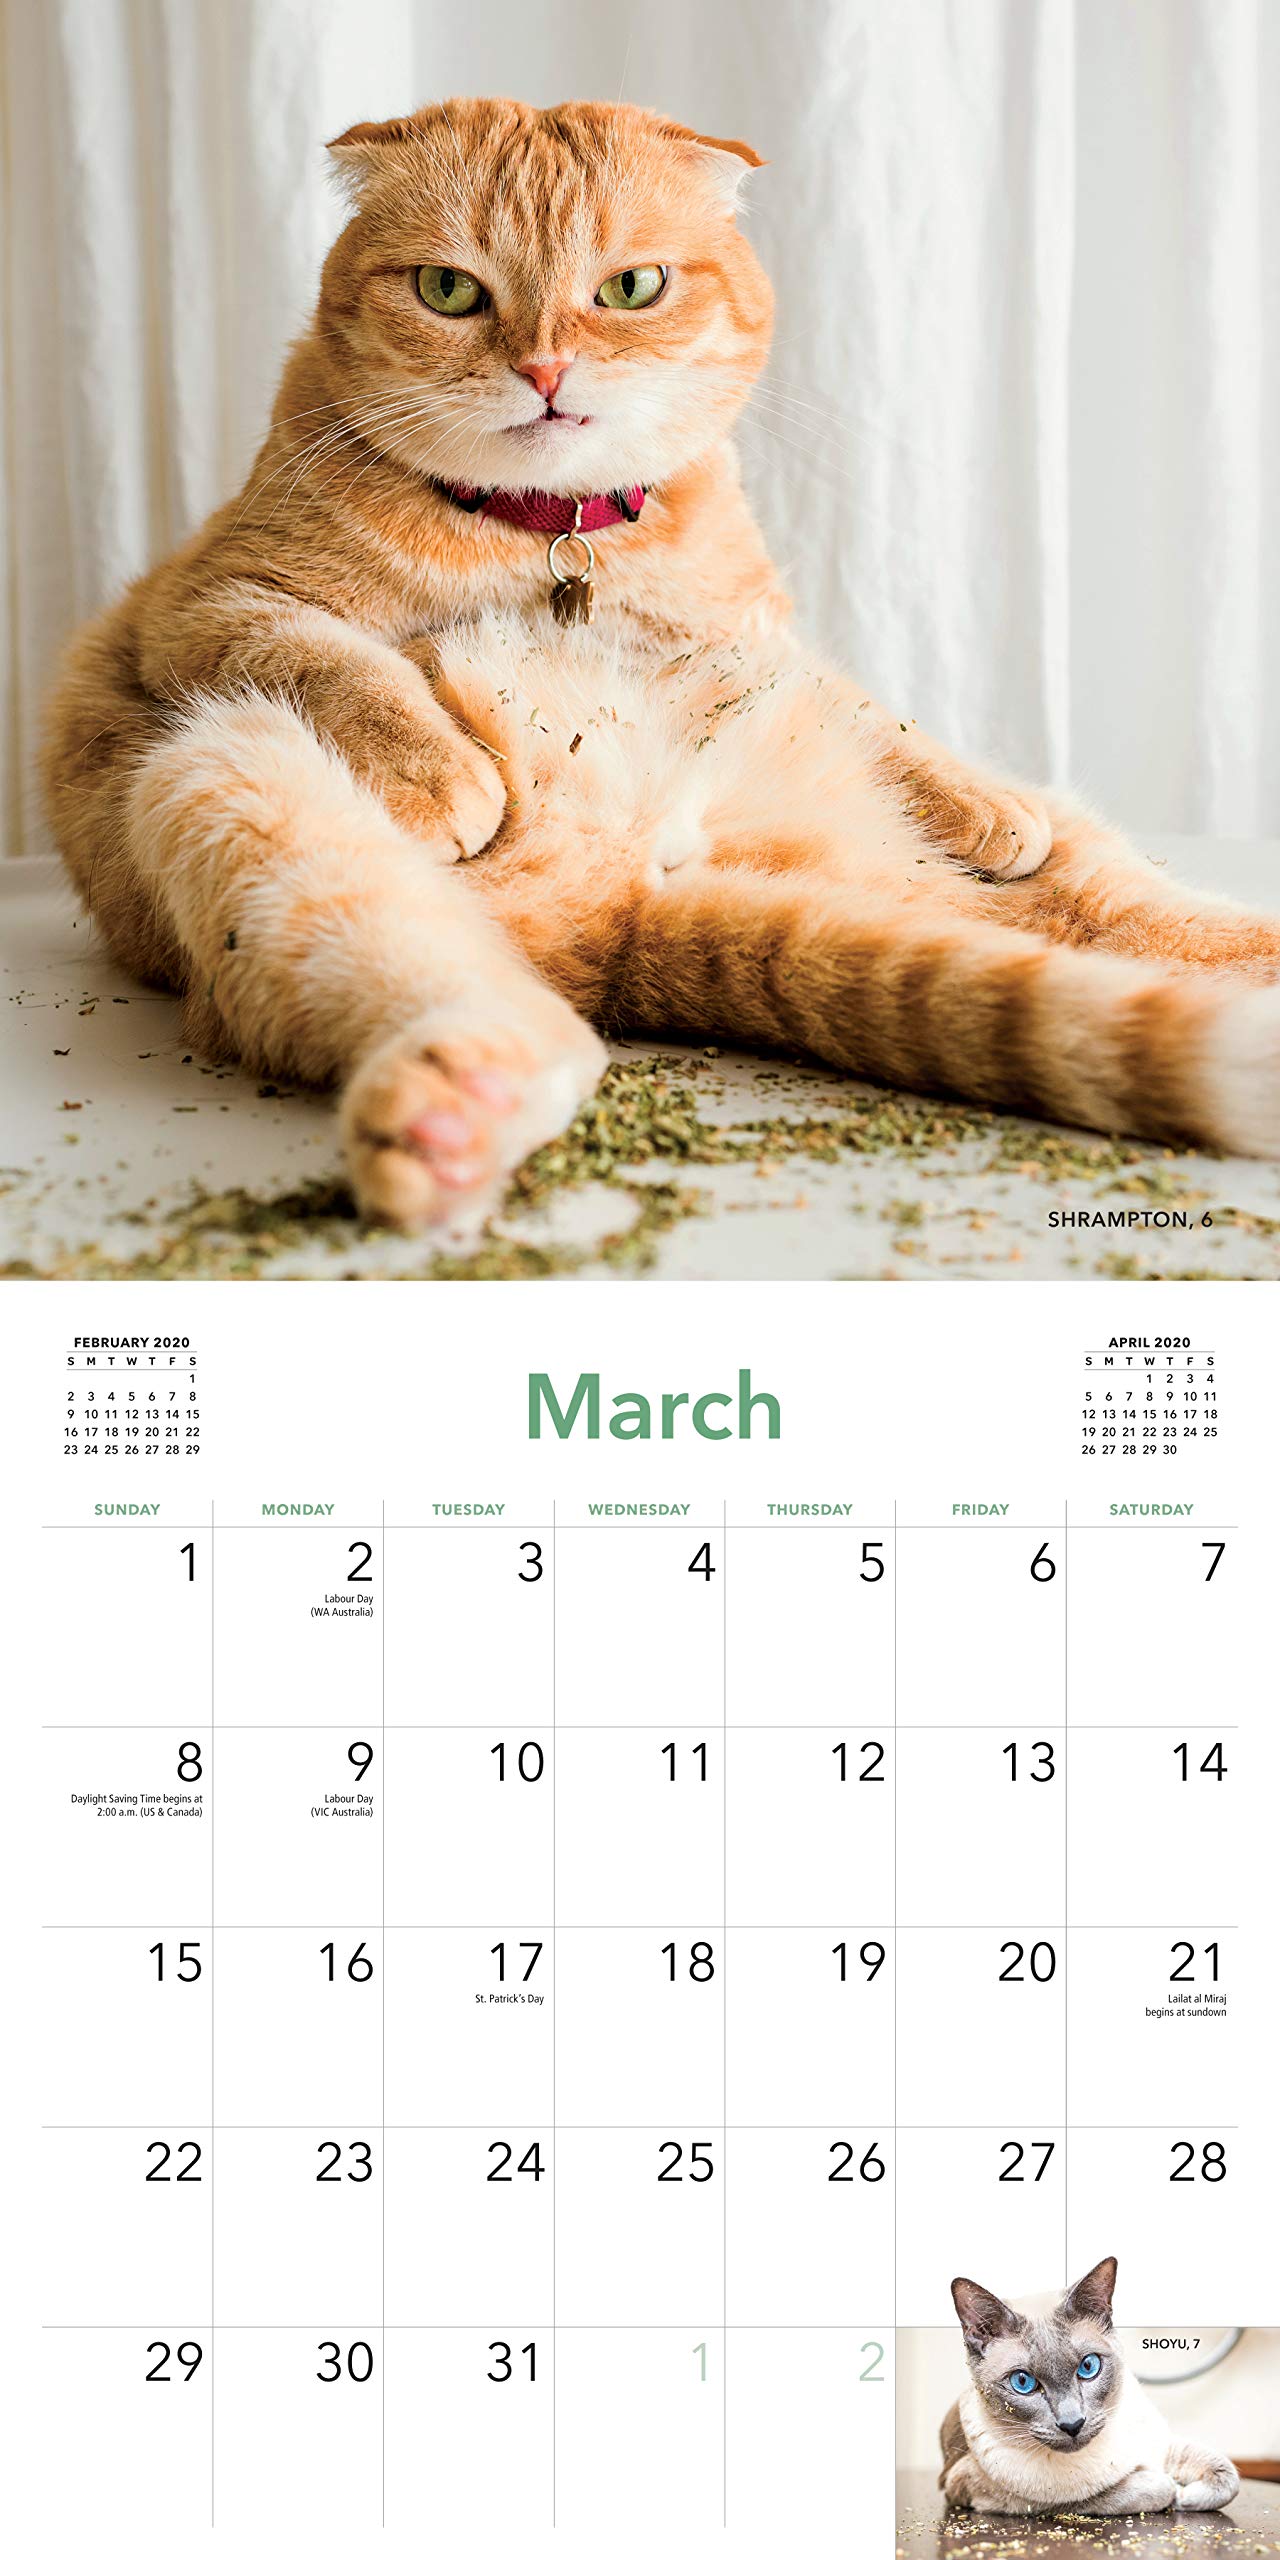 365-cat-calendar-2020-a-2020-year-cat-calendar-cat-365-day-calendar